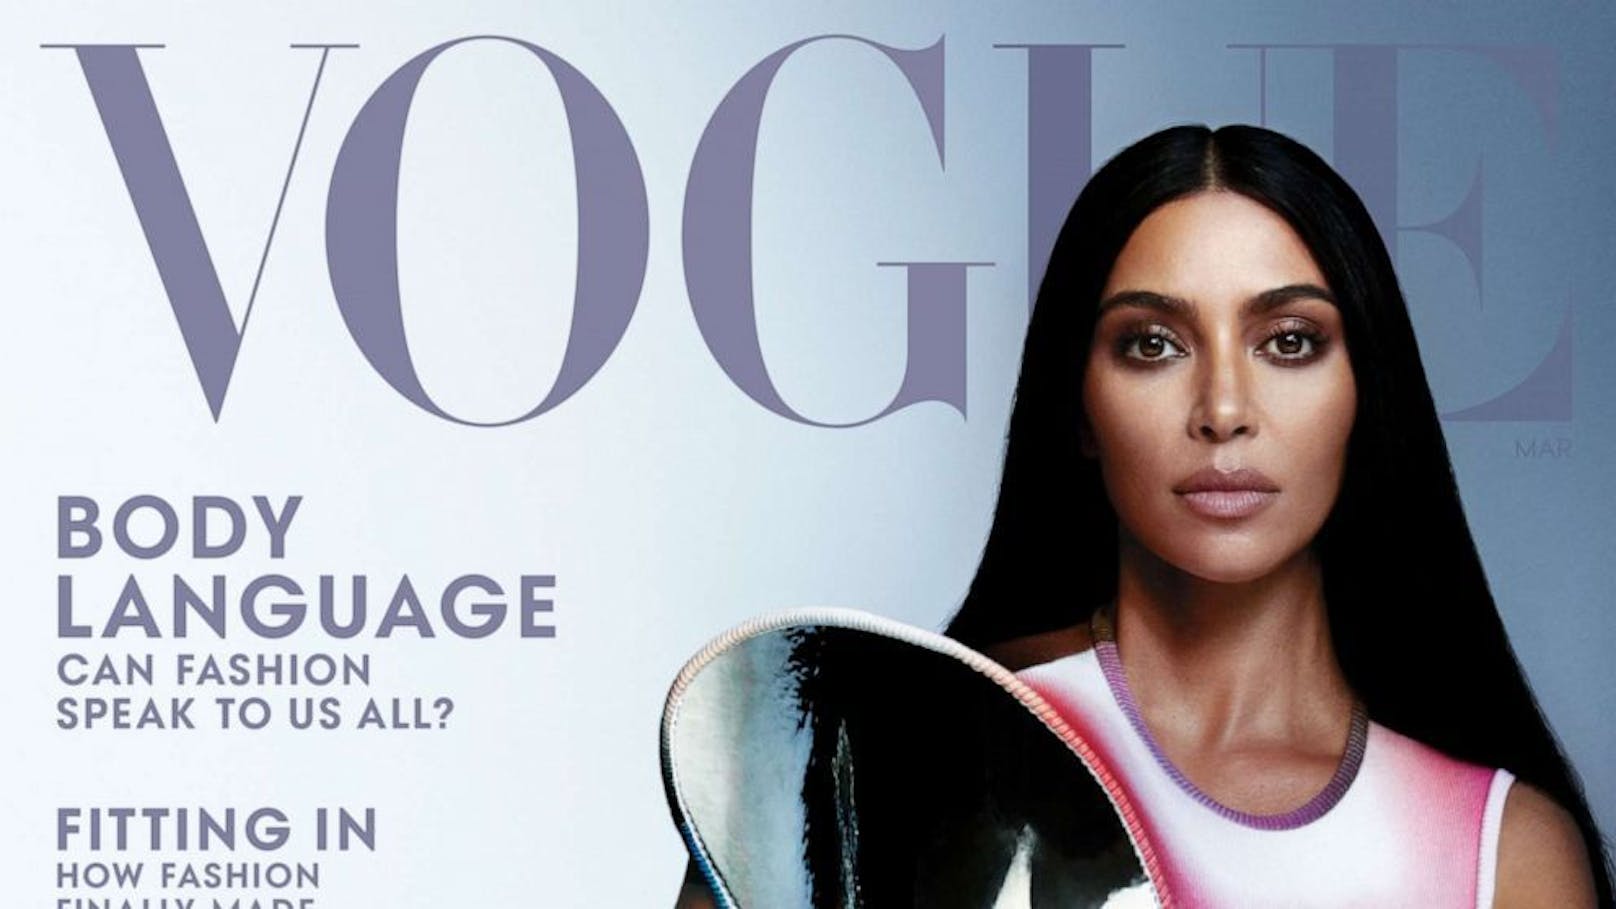 Kim hat Ärger wegen ihres neuesten "Vogue"-Covers.